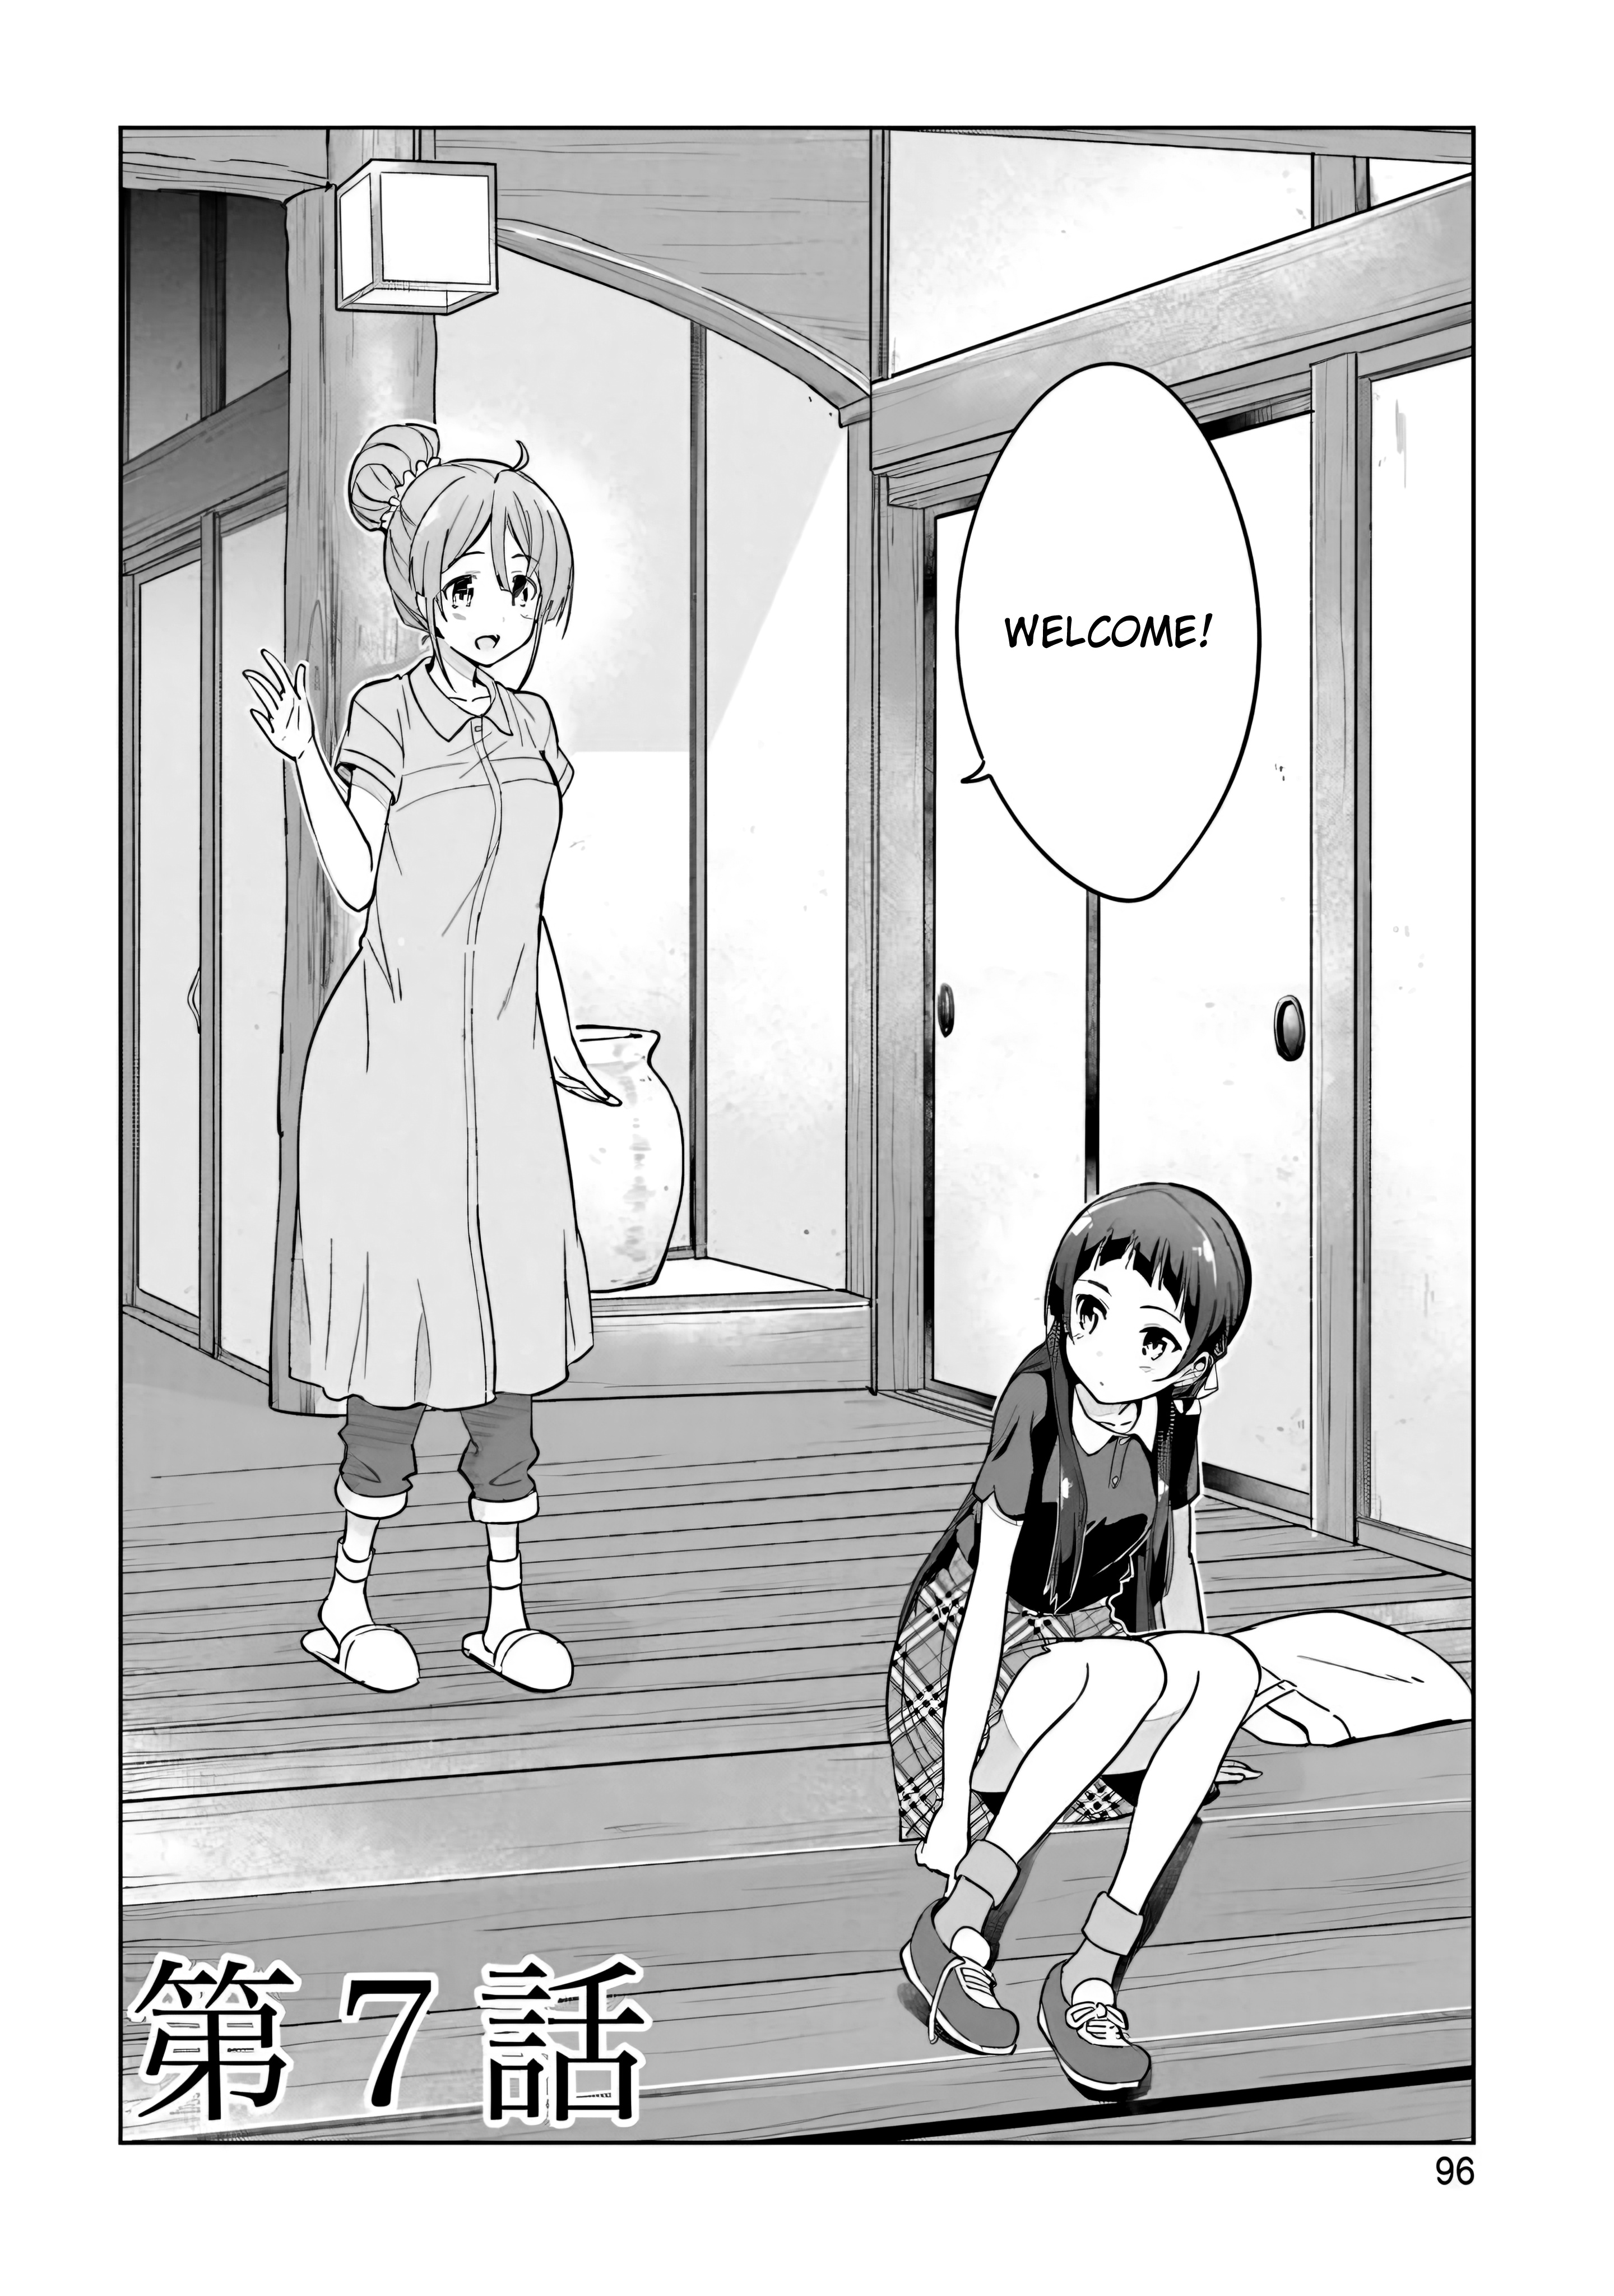 Sakura Quest Side Story: Ririko Oribe's Daily Report Vol 1 Chapter 7 #2